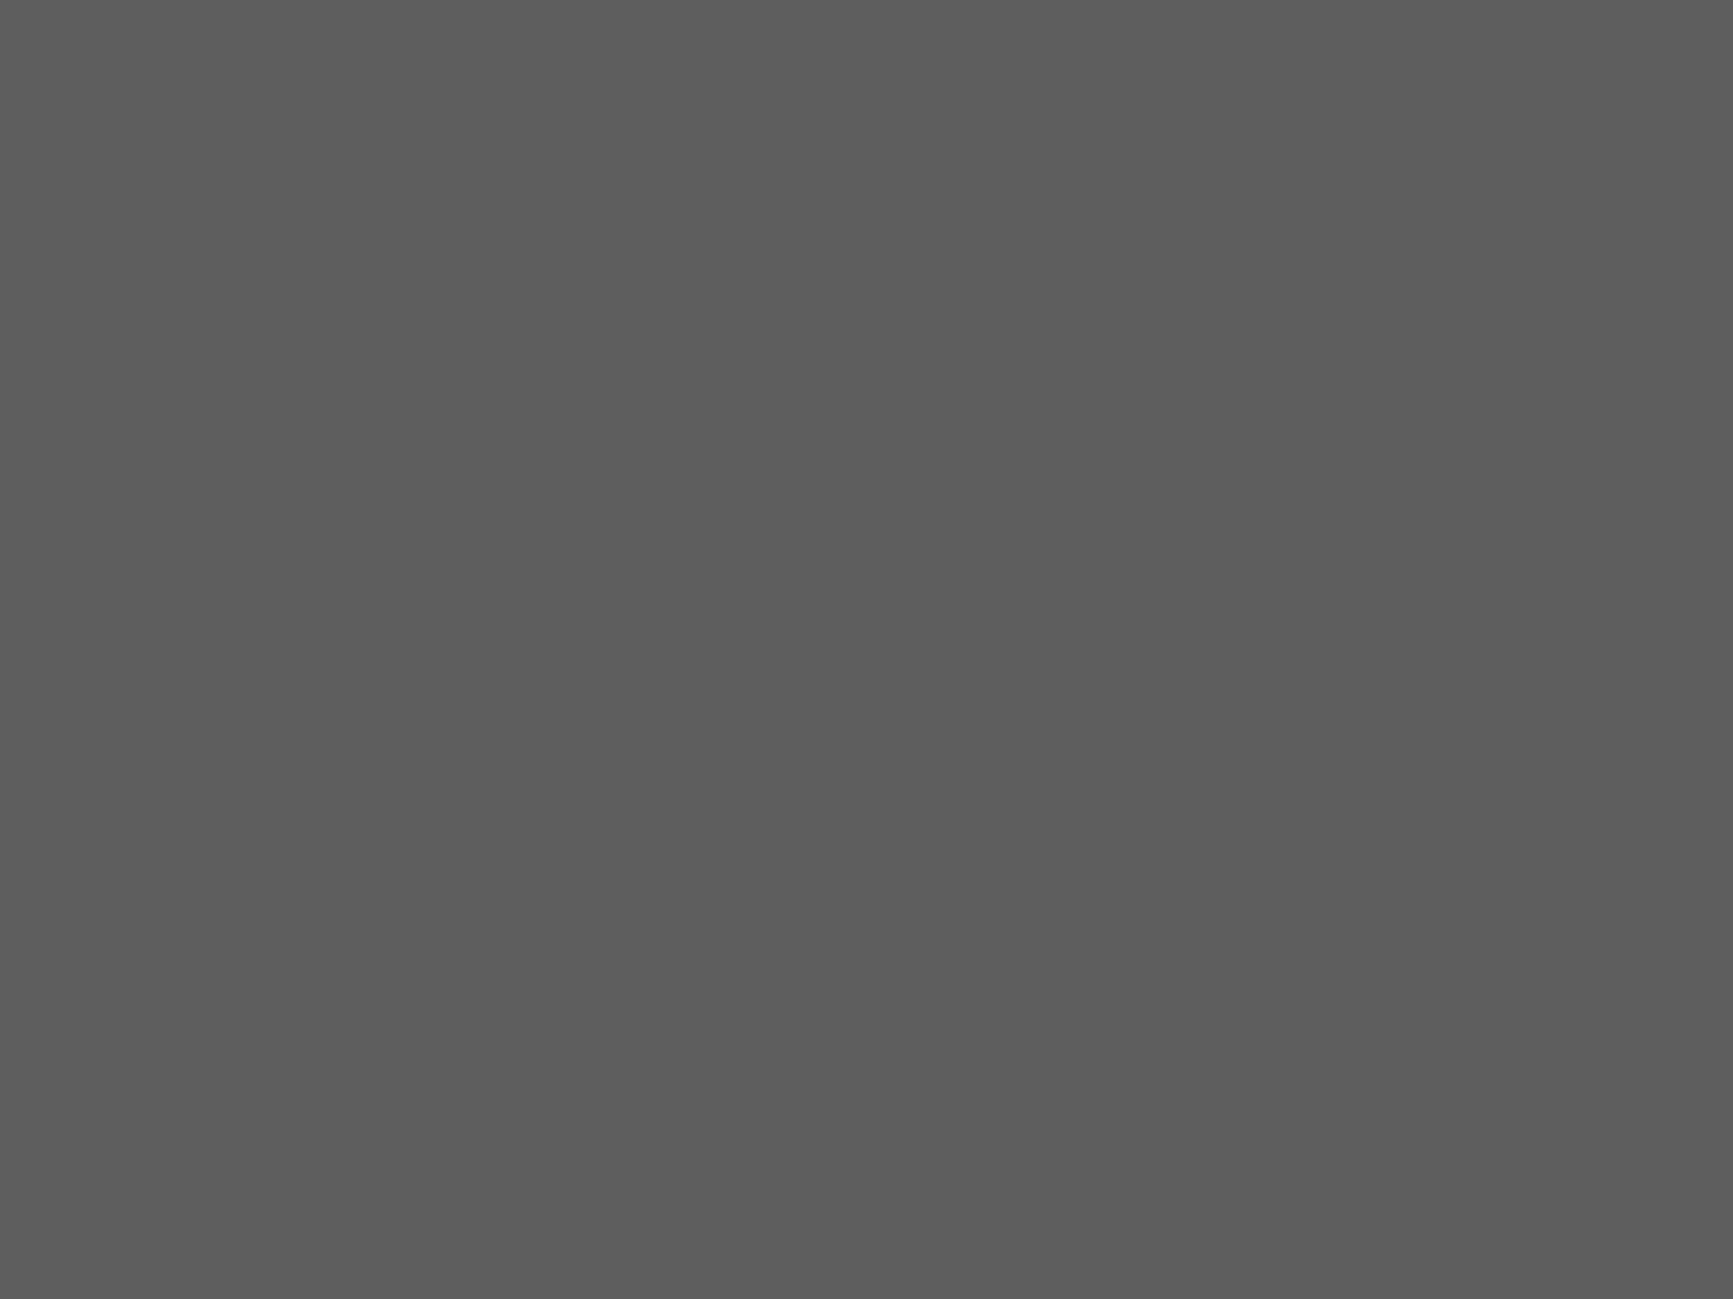 Казимир Малевич (во втором ряду второй слева) с членами Товарищества художников. 1911 год. Фотография: <a href="https://commons.wikimedia.org/wiki/File:Malevich_1911.jpg" target="_blank" rel="noopener">Wikimedia Commons</a> / <a href="https://creativecommons.org/publicdomain/mark/1.0/" target="_blank" rel="noopener">Public domain</a>